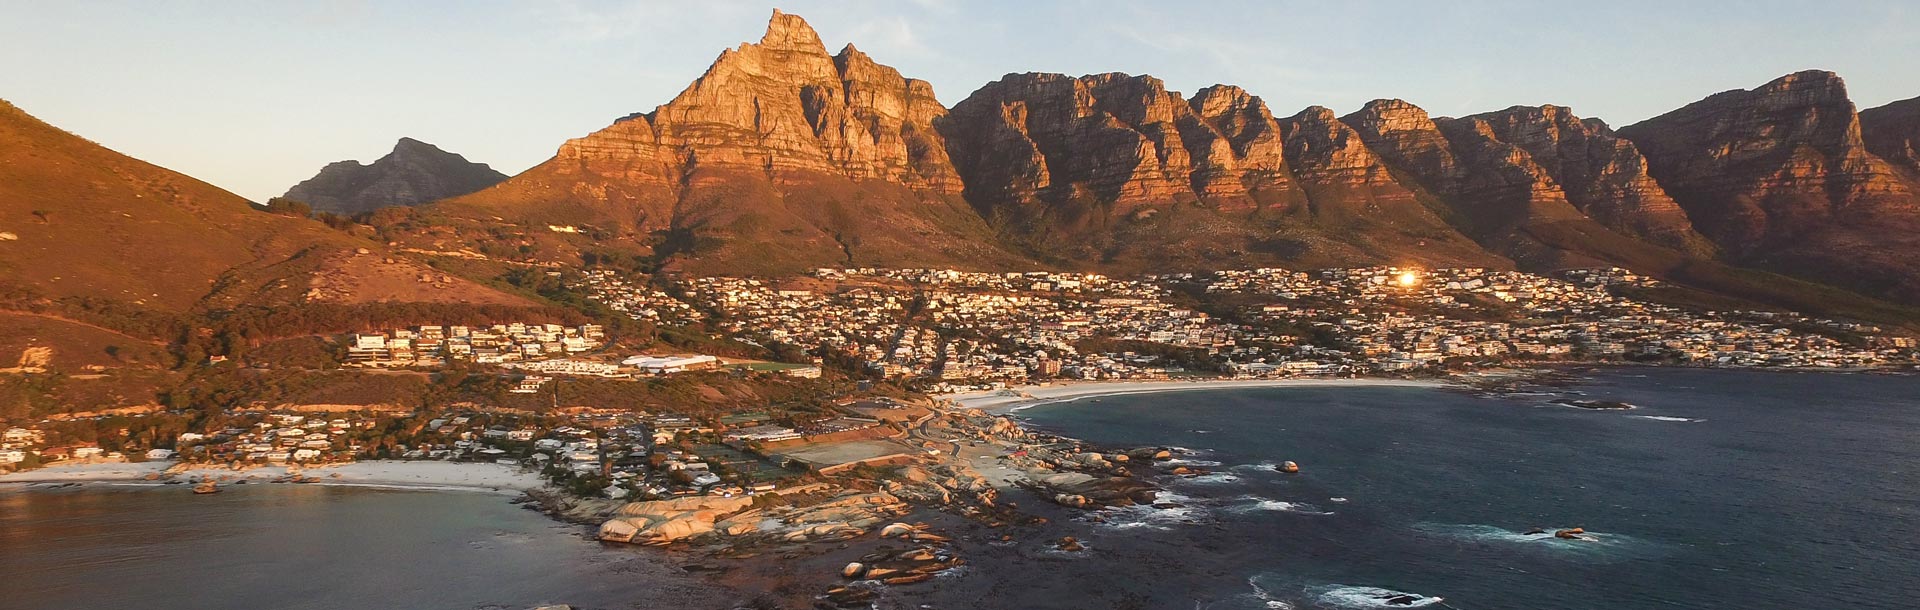 Montagnes de Cape Town vu de la mer